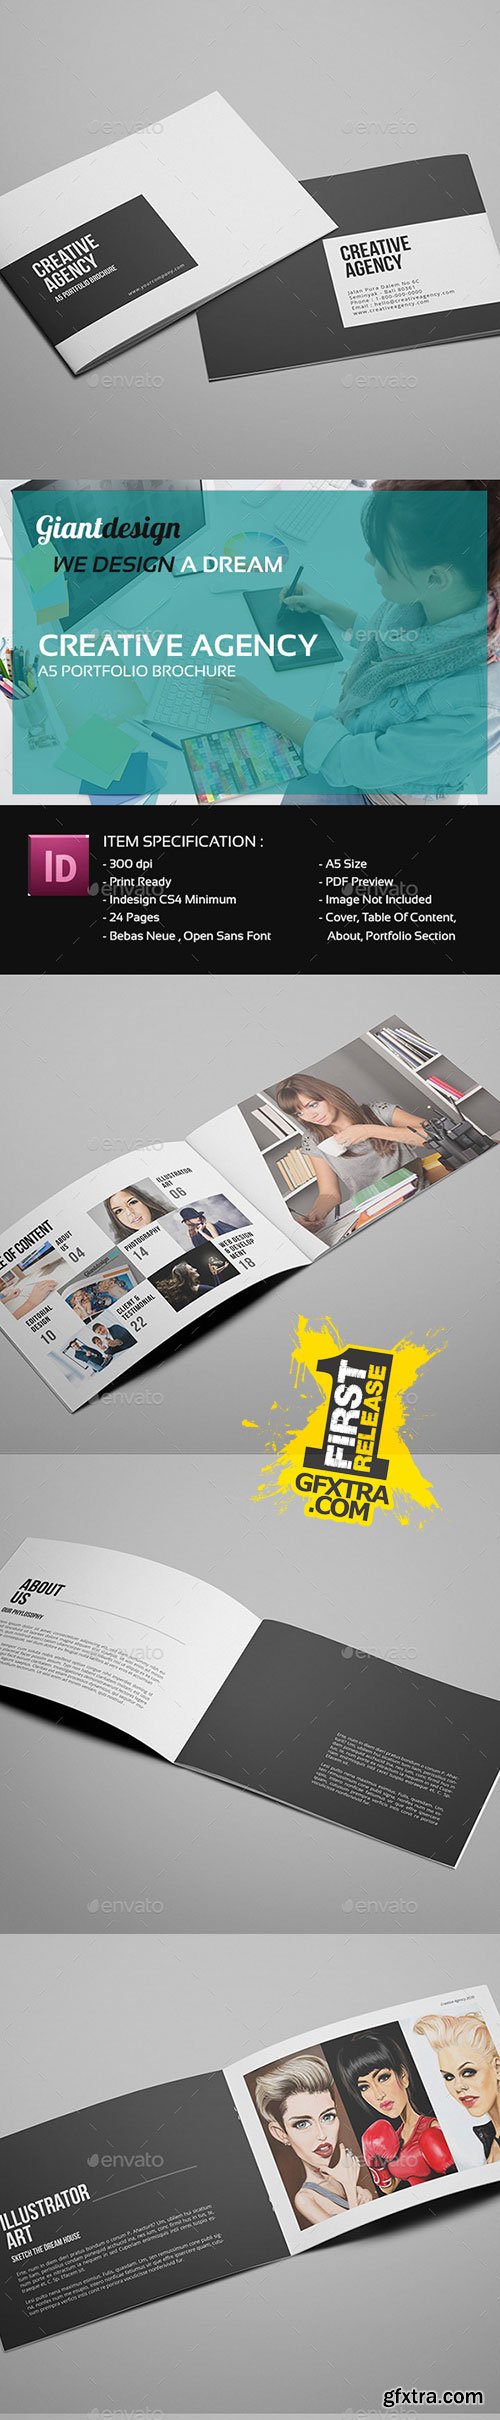 GraphicRiver - Creative Agency - A5 Portfolio Brochure 9699291